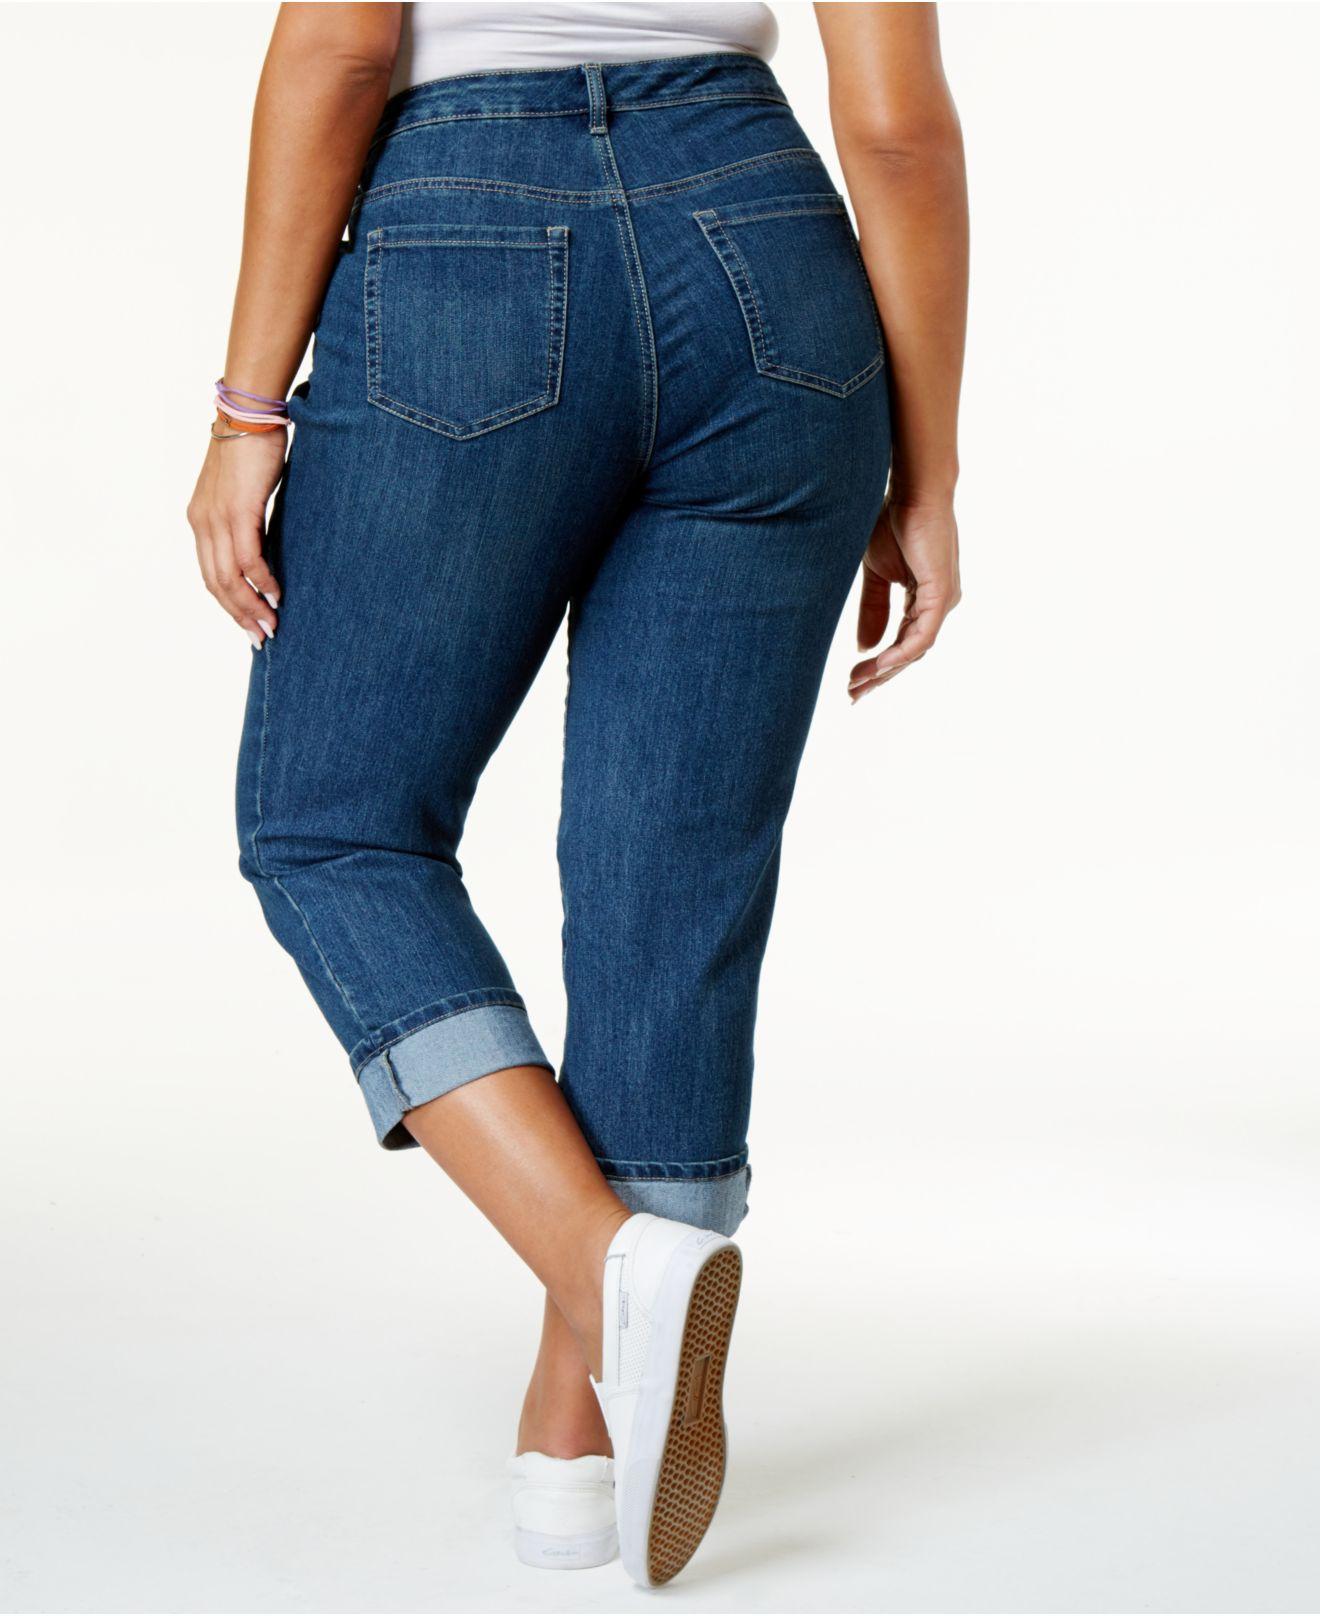 Lyst - Style & Co. Plus Size Cuffed Capri Jeans in Blue